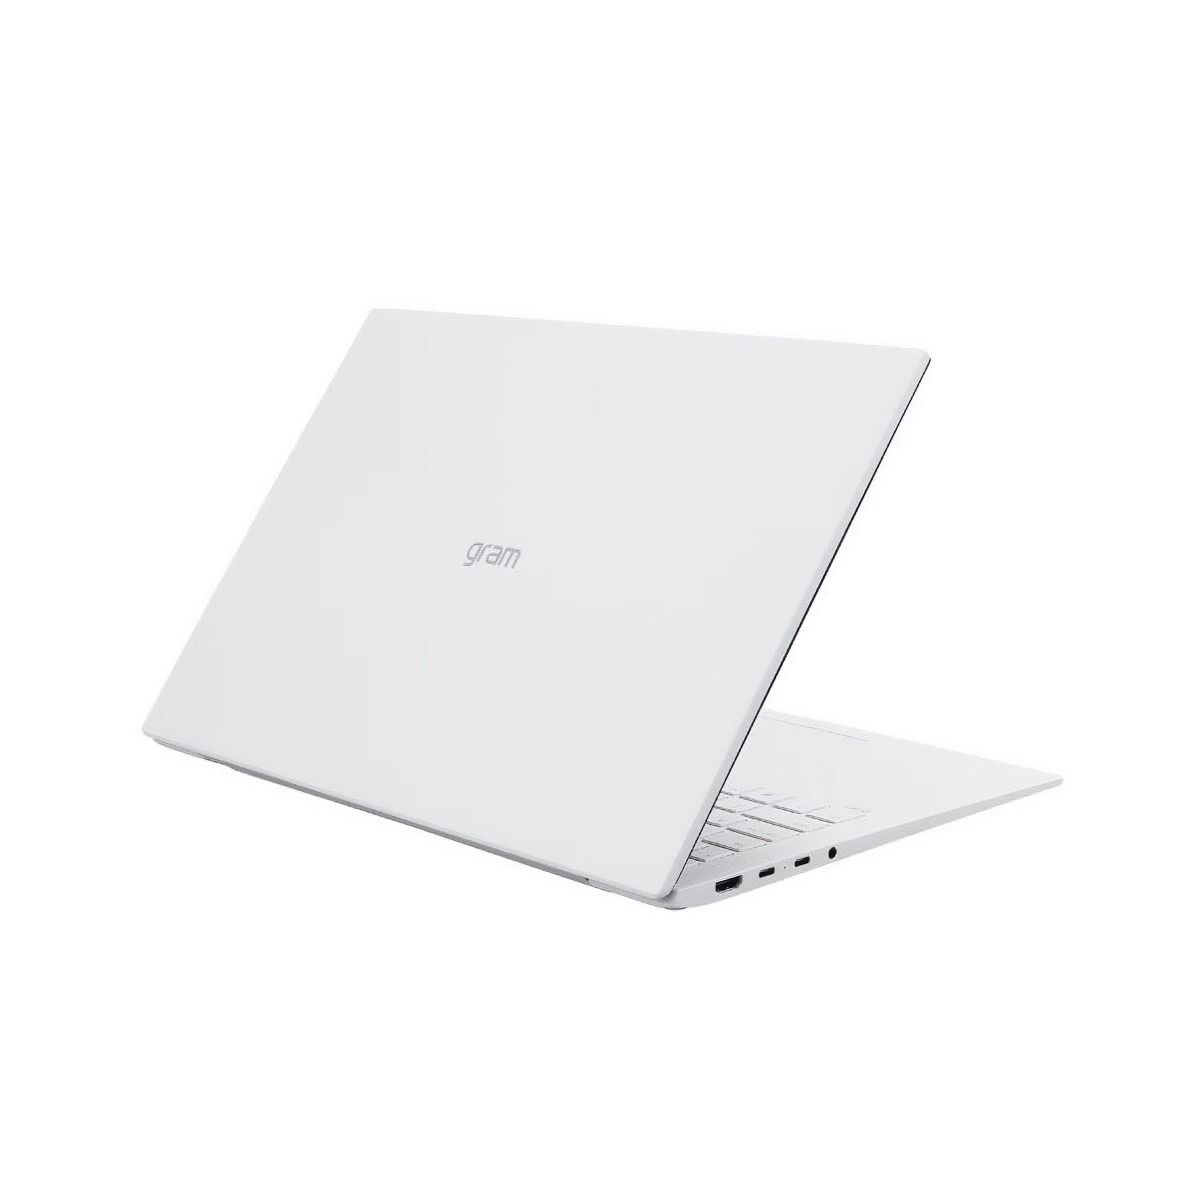 LG Gram Style 16" 120Hz Laptop Intel i7 13th Gen 32GB RAM 1TB SSD White